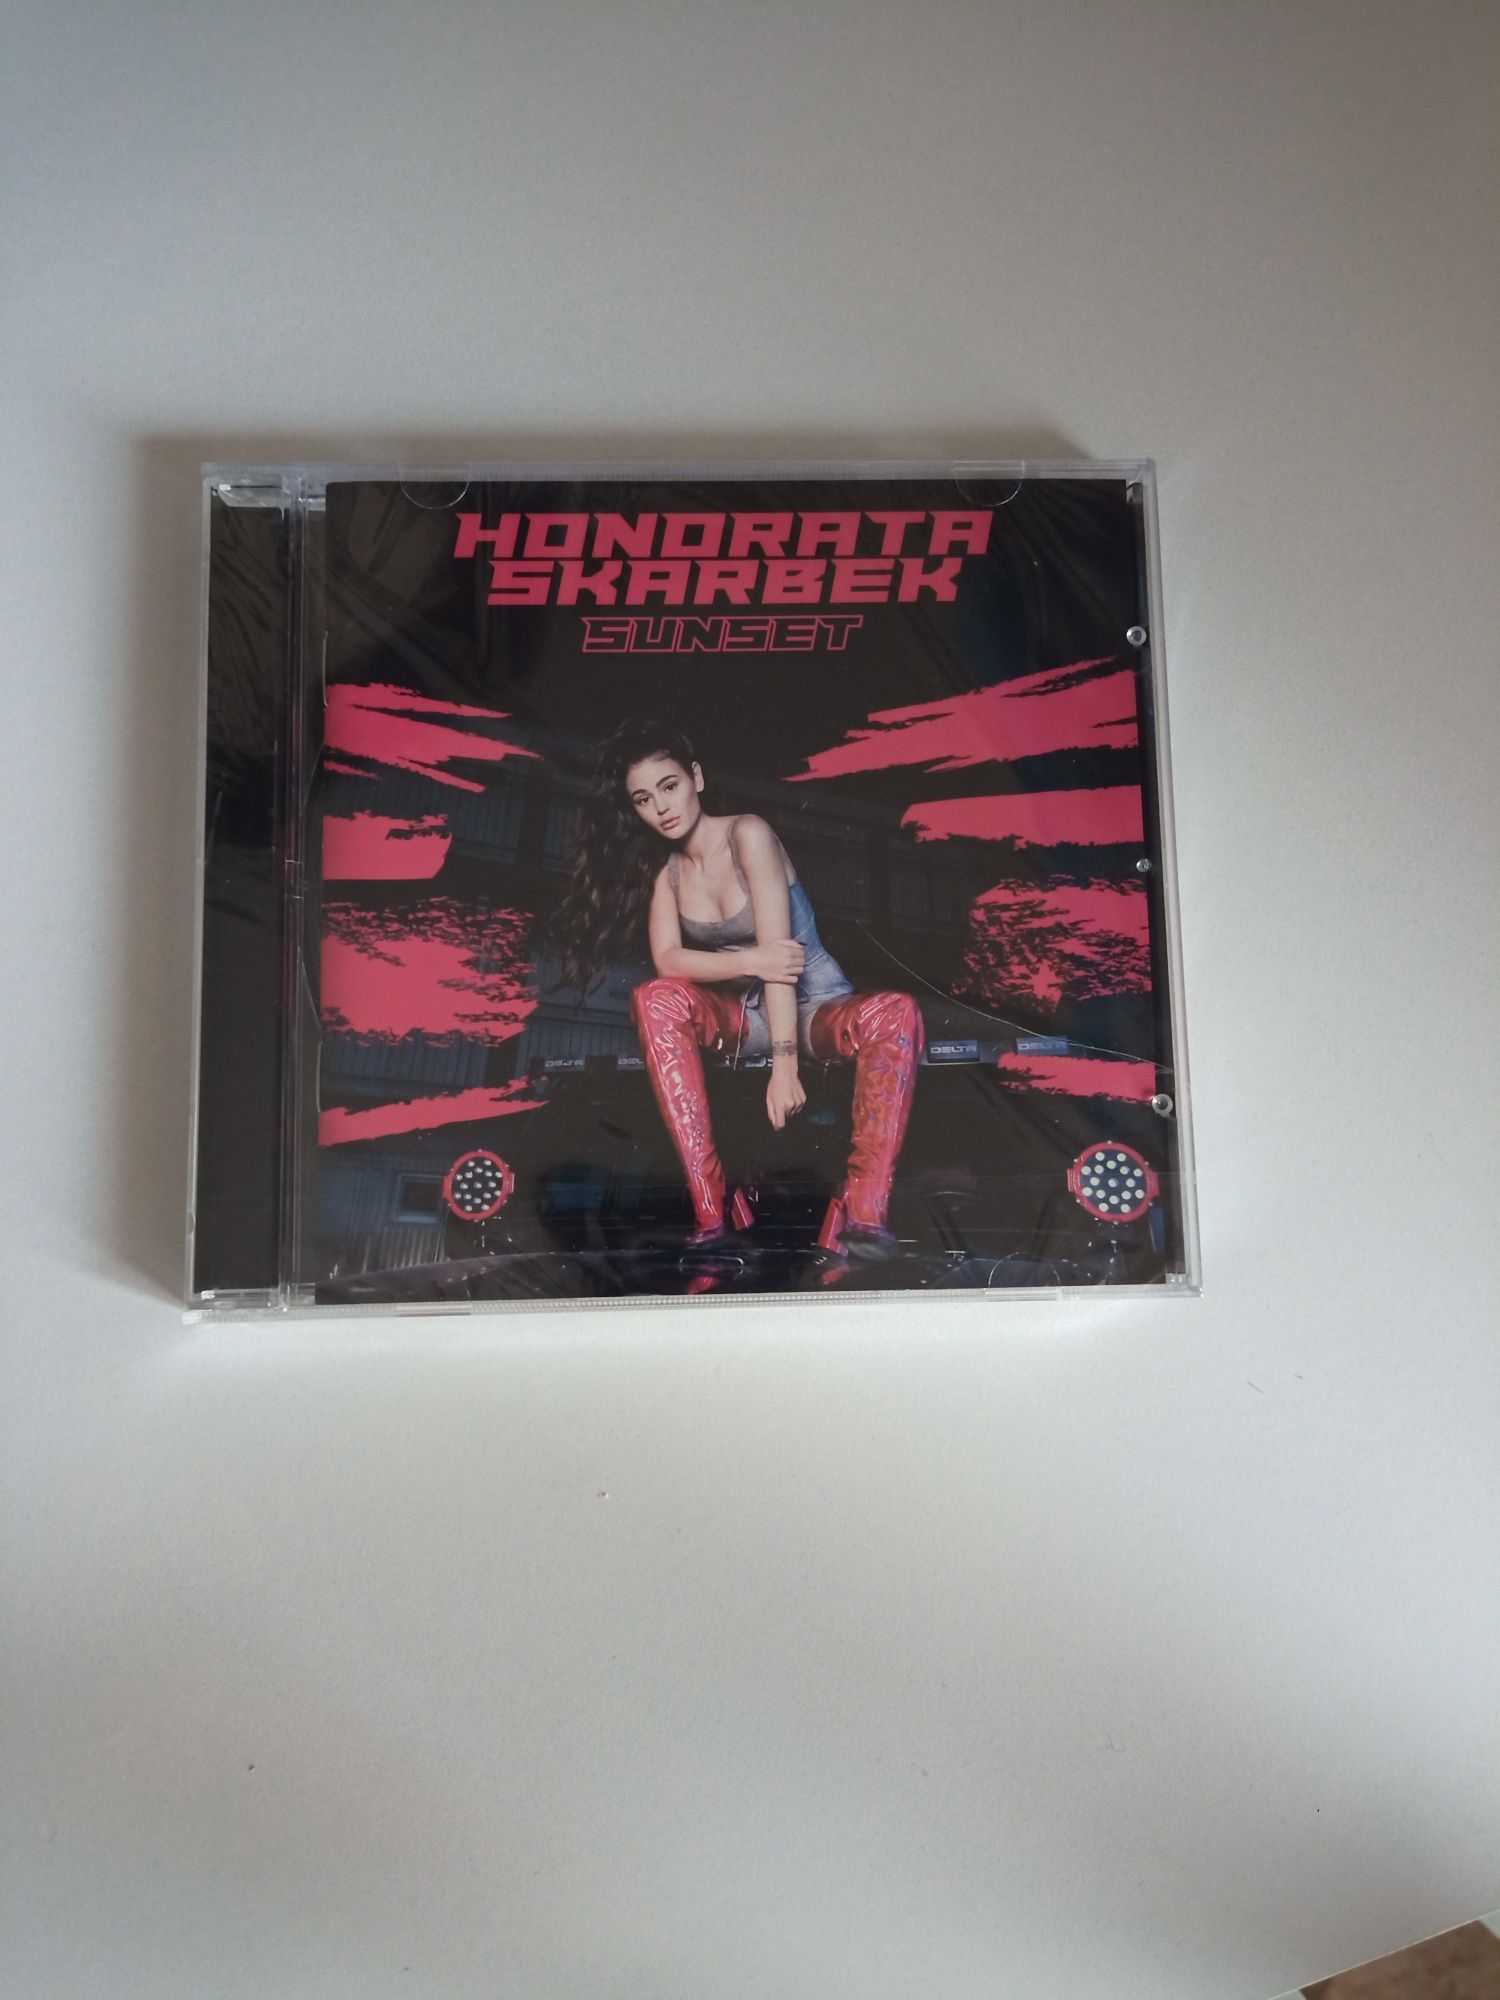 Honorata Skarbek "Sunset" - płyta CD z muzyką